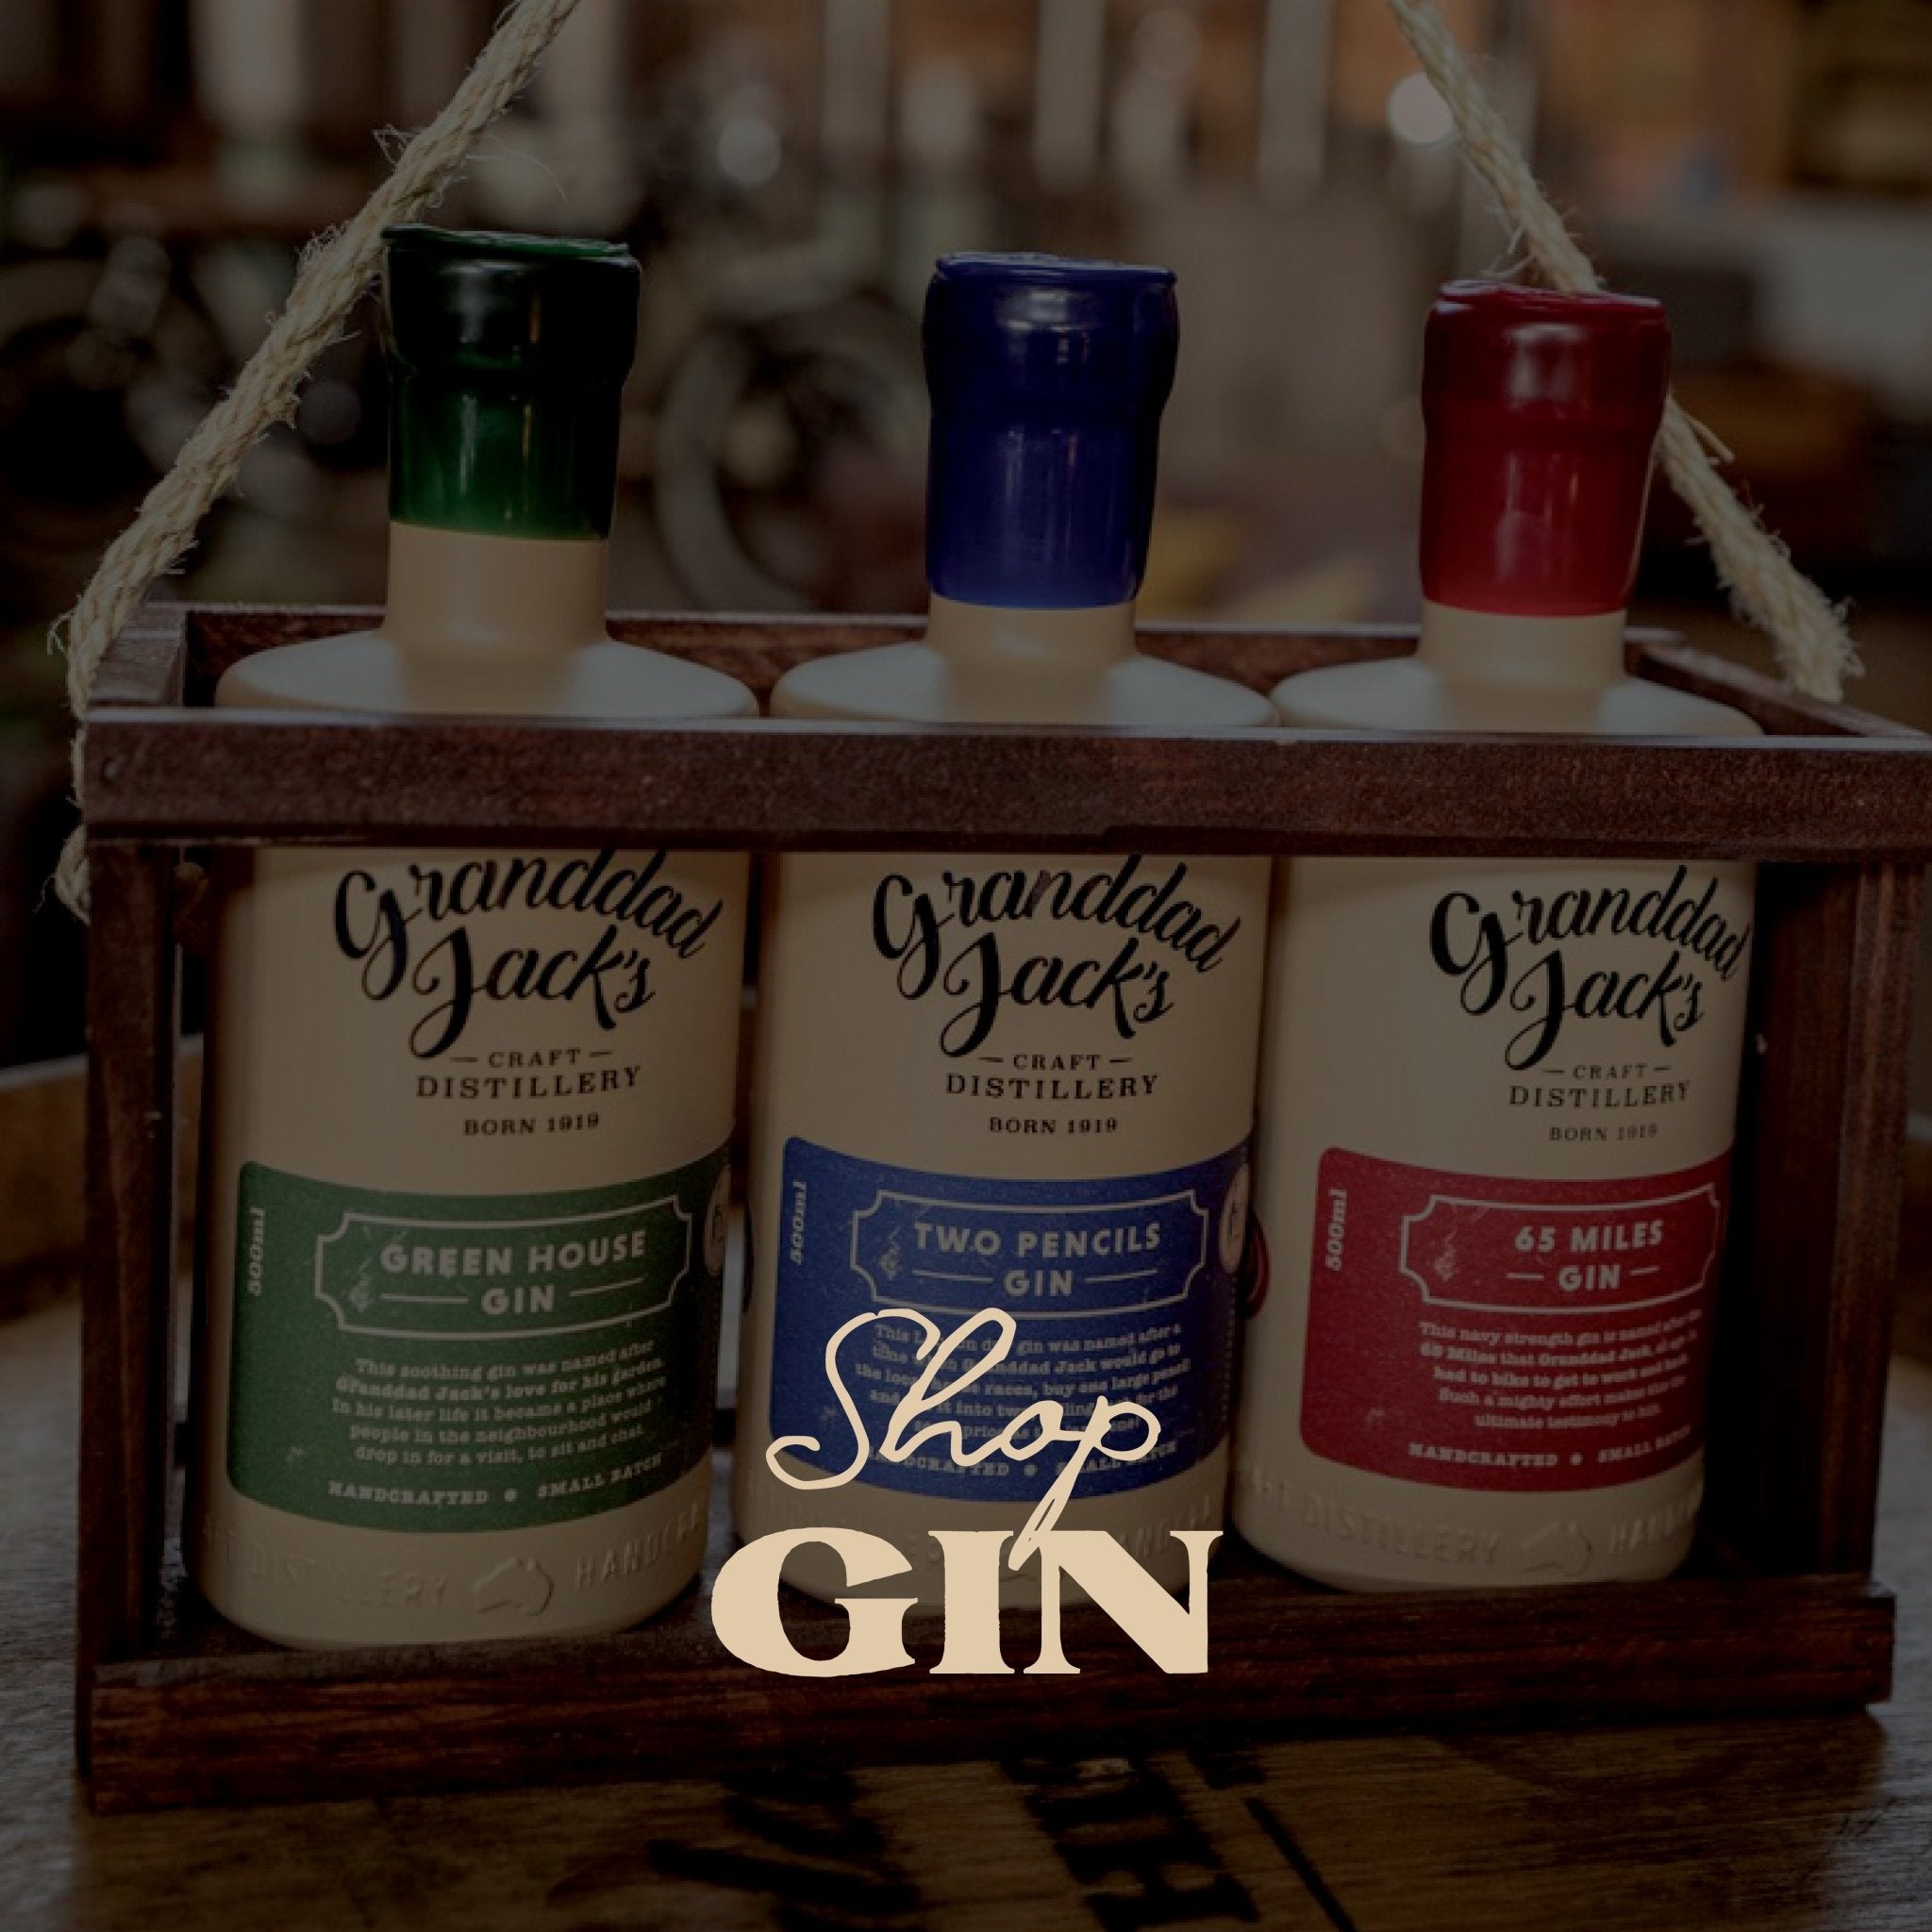 Gin - Granddad Jack's Craft Distillery